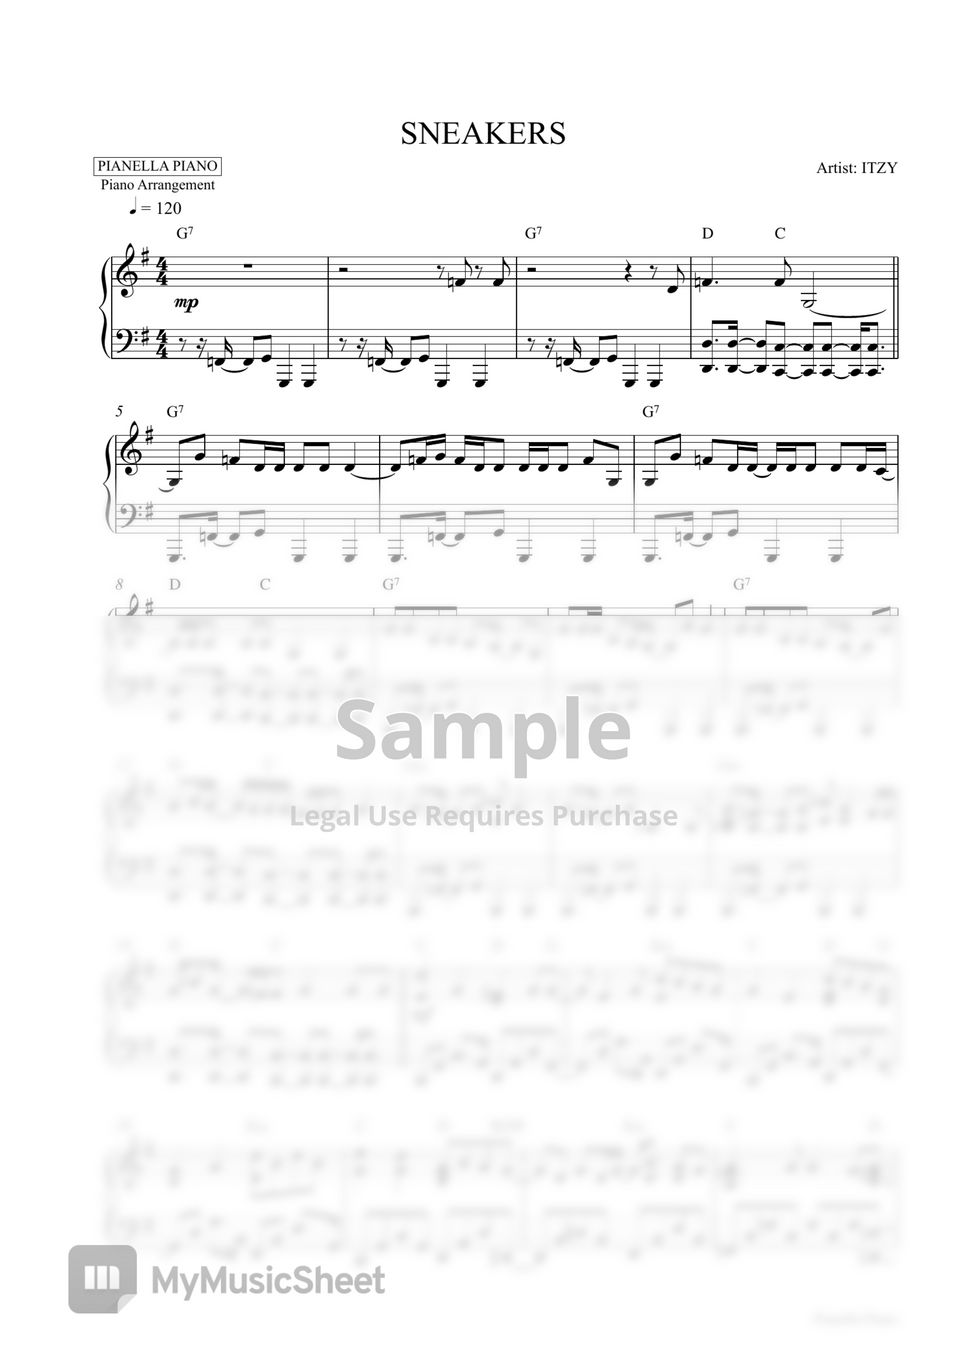 ITZY - SNEAKERS (Piano Sheet) by Pianella Piano